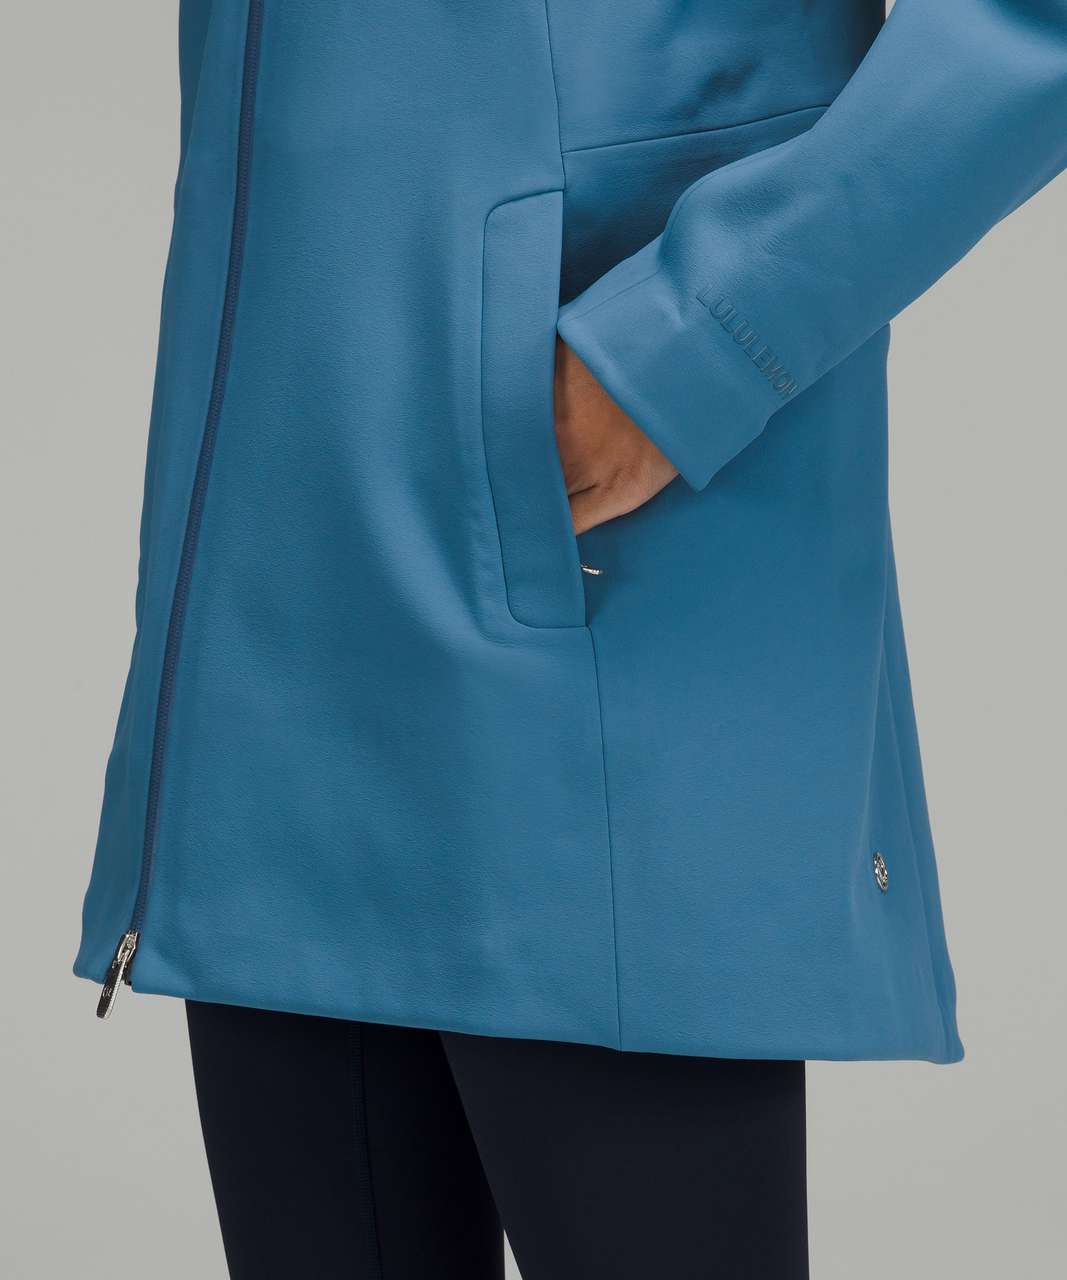 New Lululemon Cross Chill Jacket RepelShell Blue Linencolor size 6